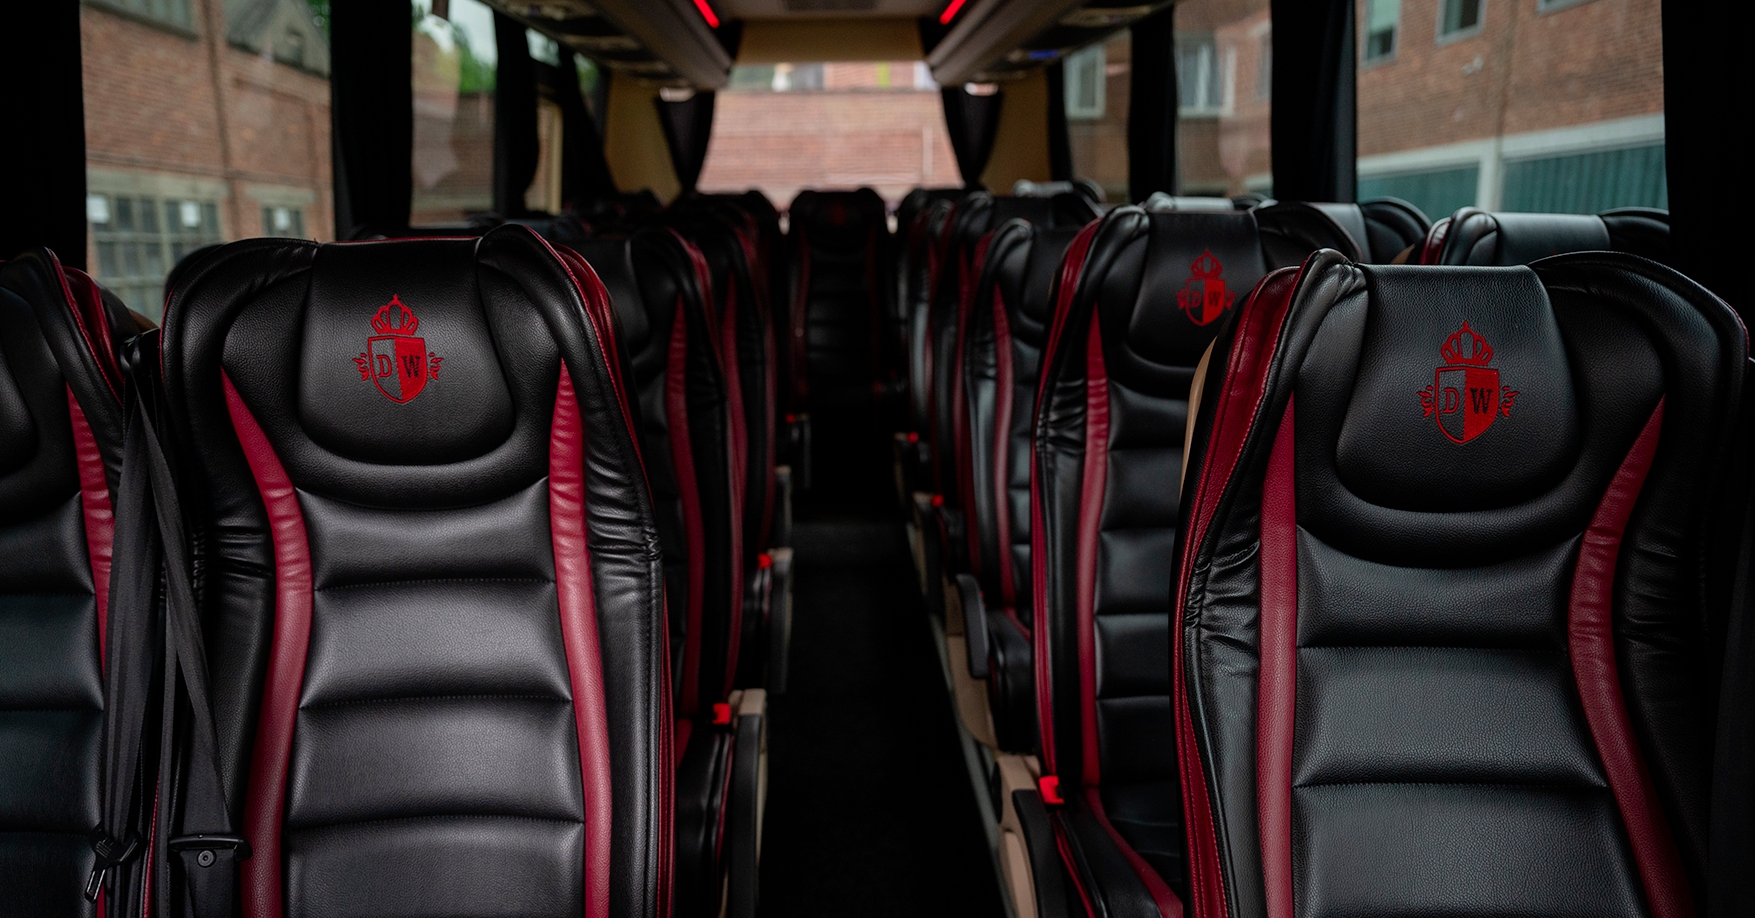 VIP Mini Coach 25 passengers